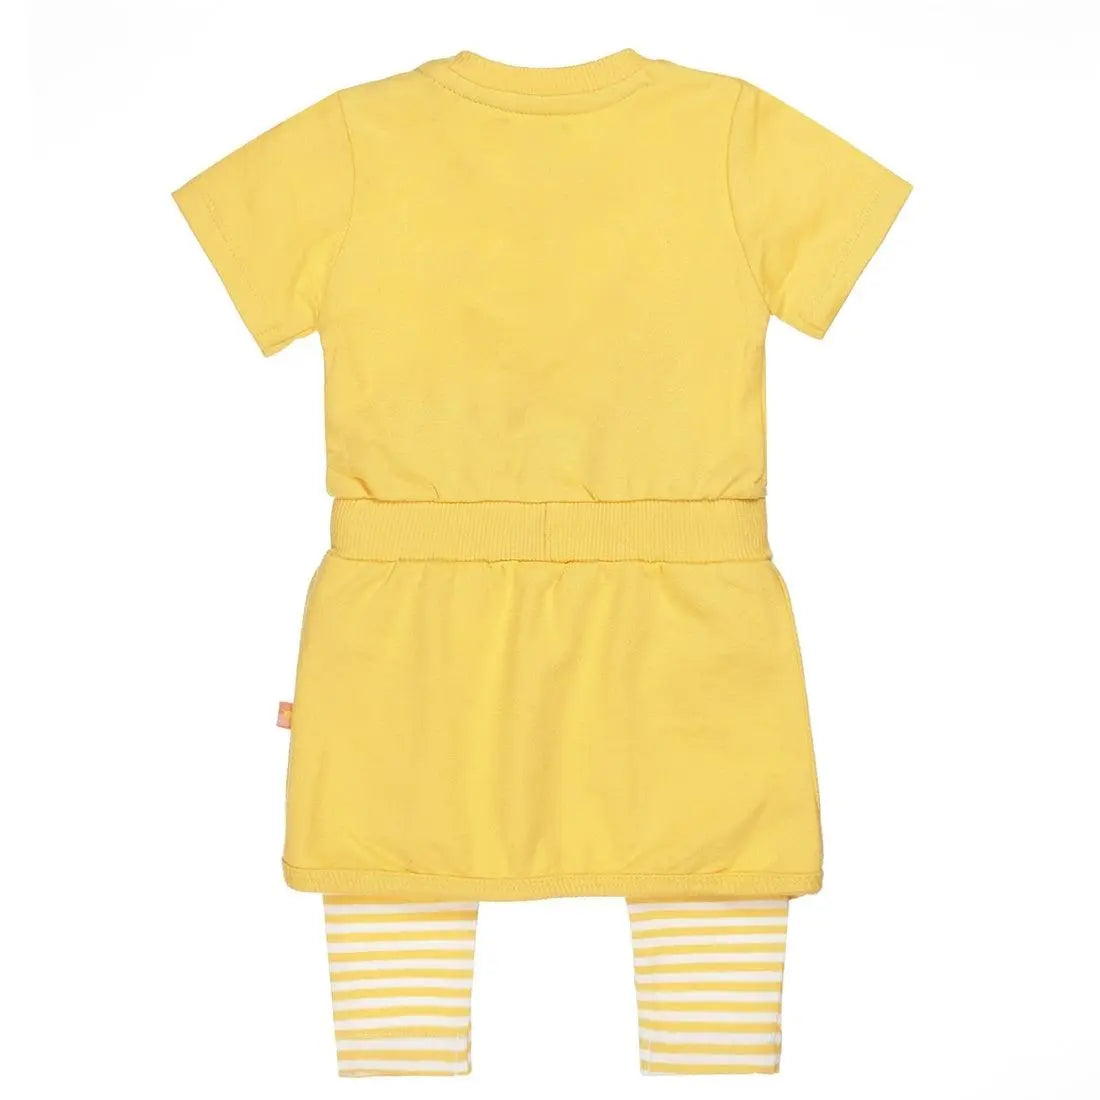 Girls Baby Set With Dress and Legging Yellow Striped | Dirkje - Jenni Kidz